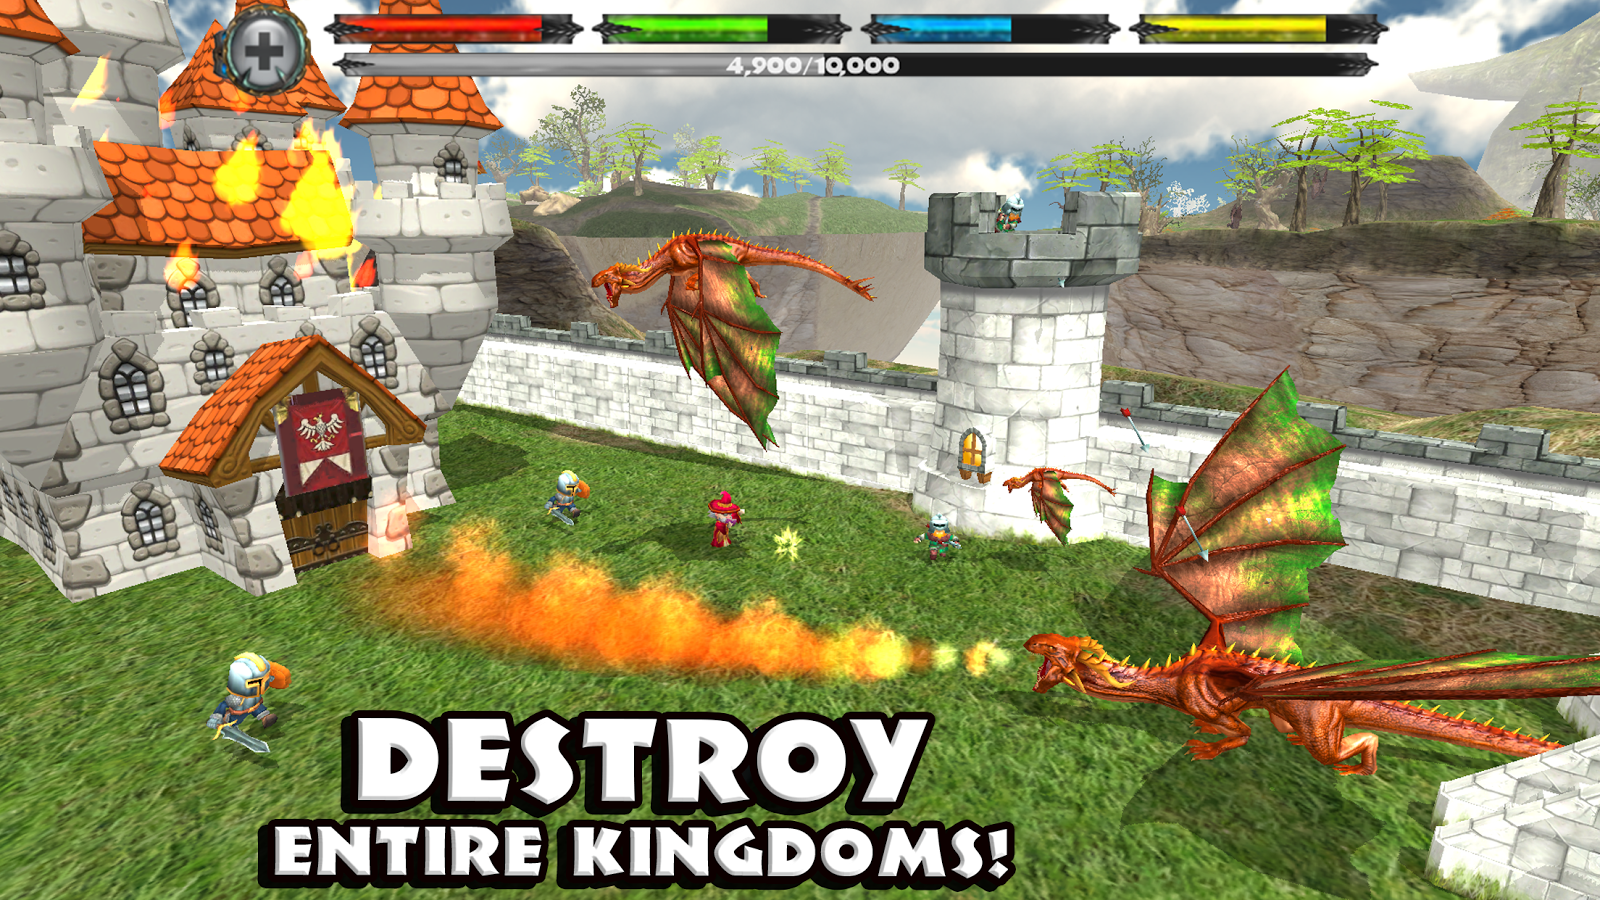 World of Dragons: Simulator - screenshot